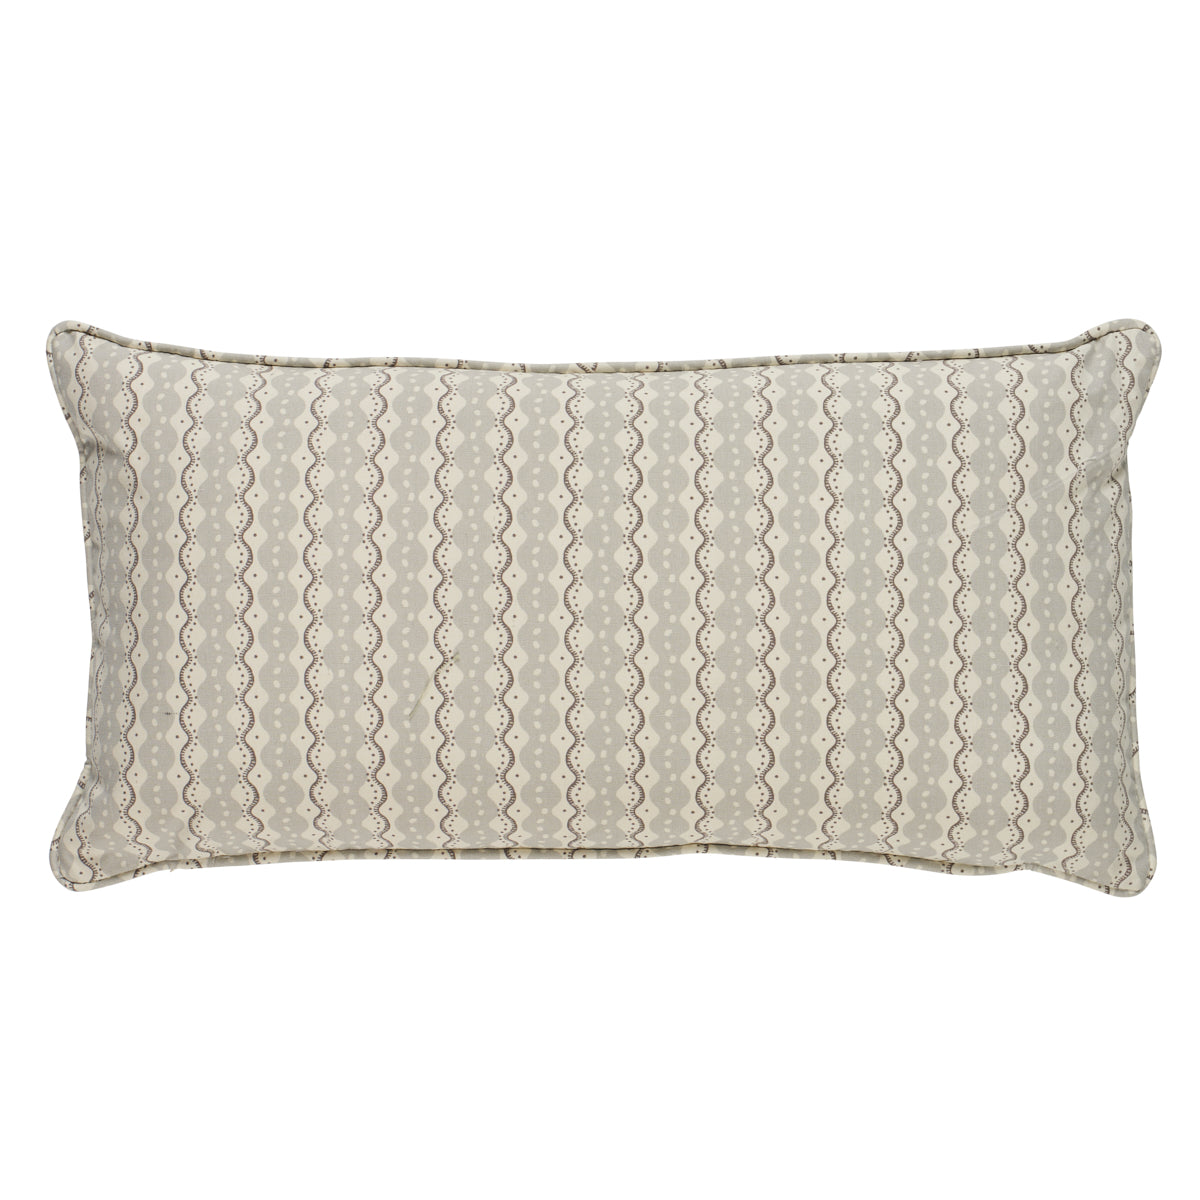 Purchase So18144118 | Centipede Stripe Pillow, Pumice - Schumacher Pillows